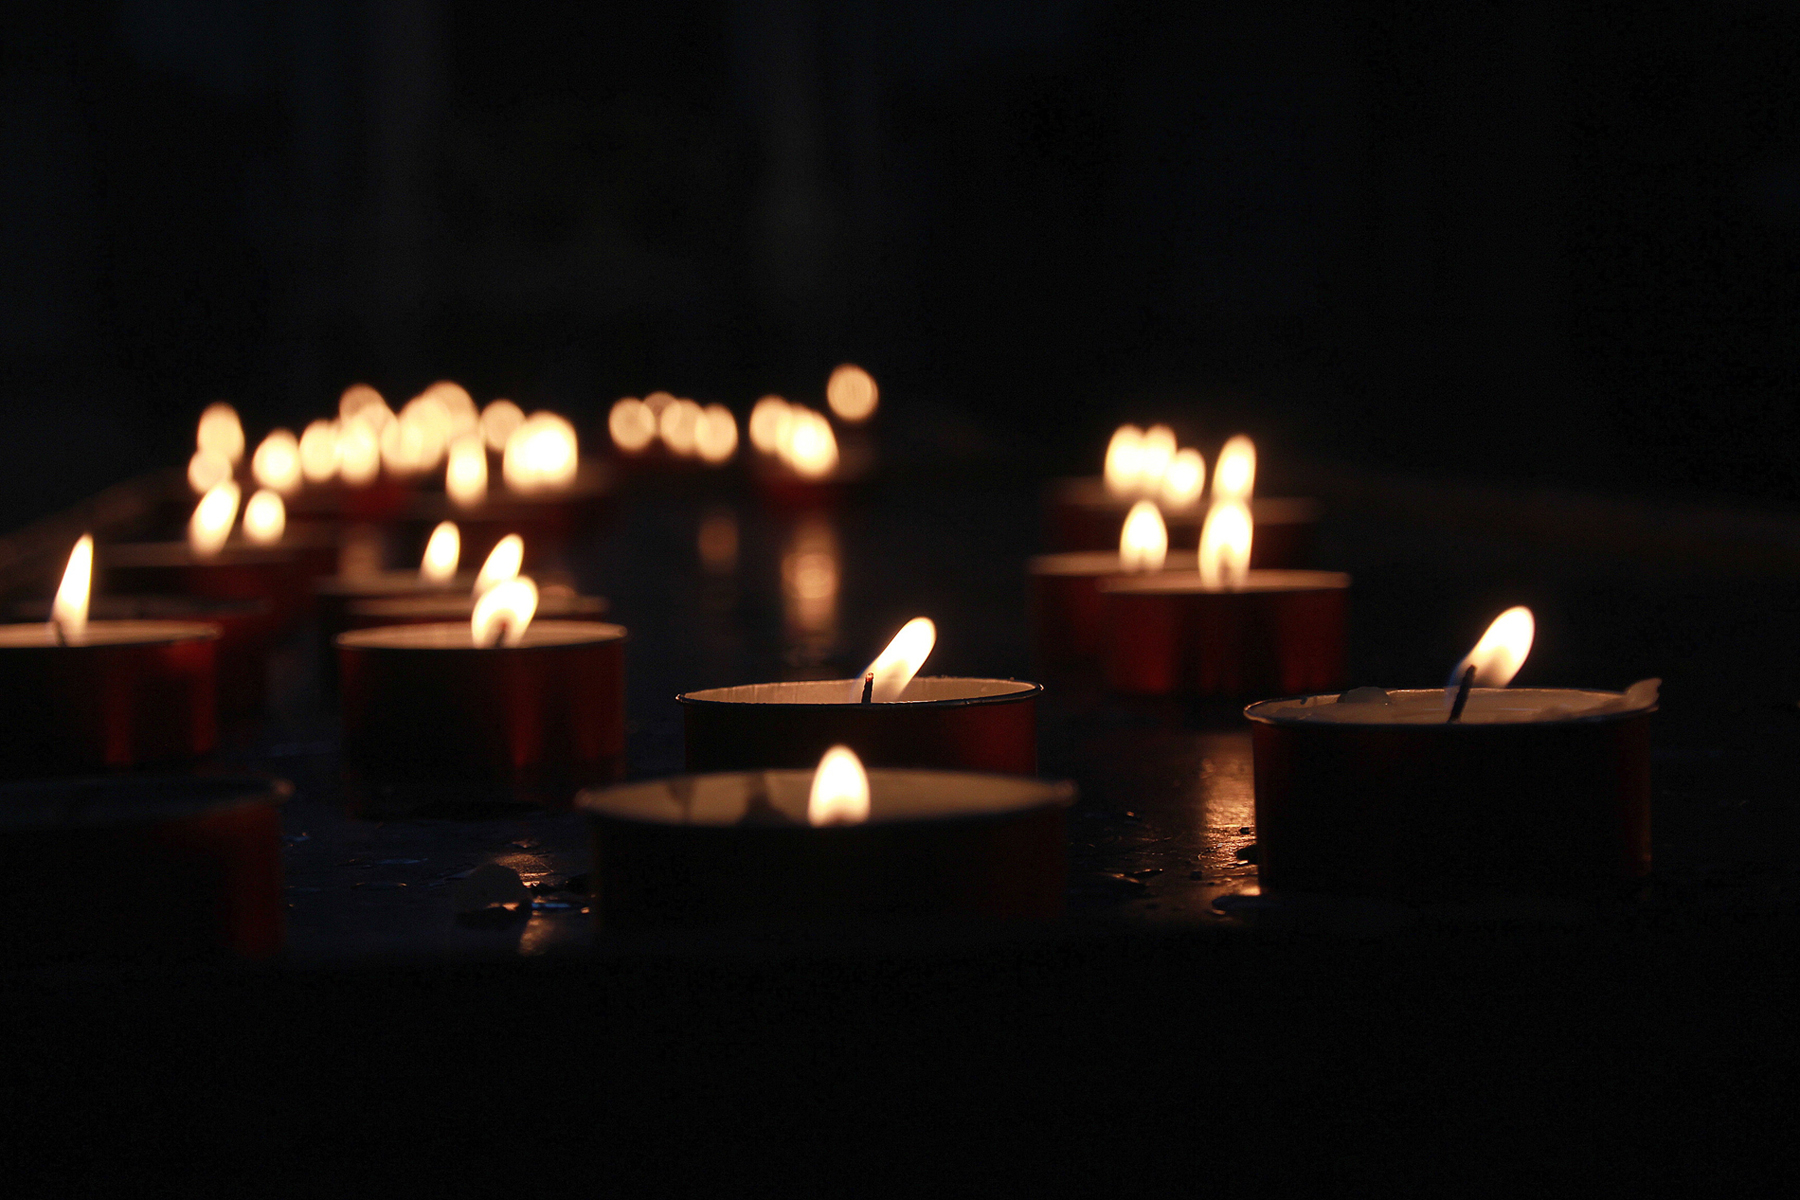 Votive candles illuminate the darkness